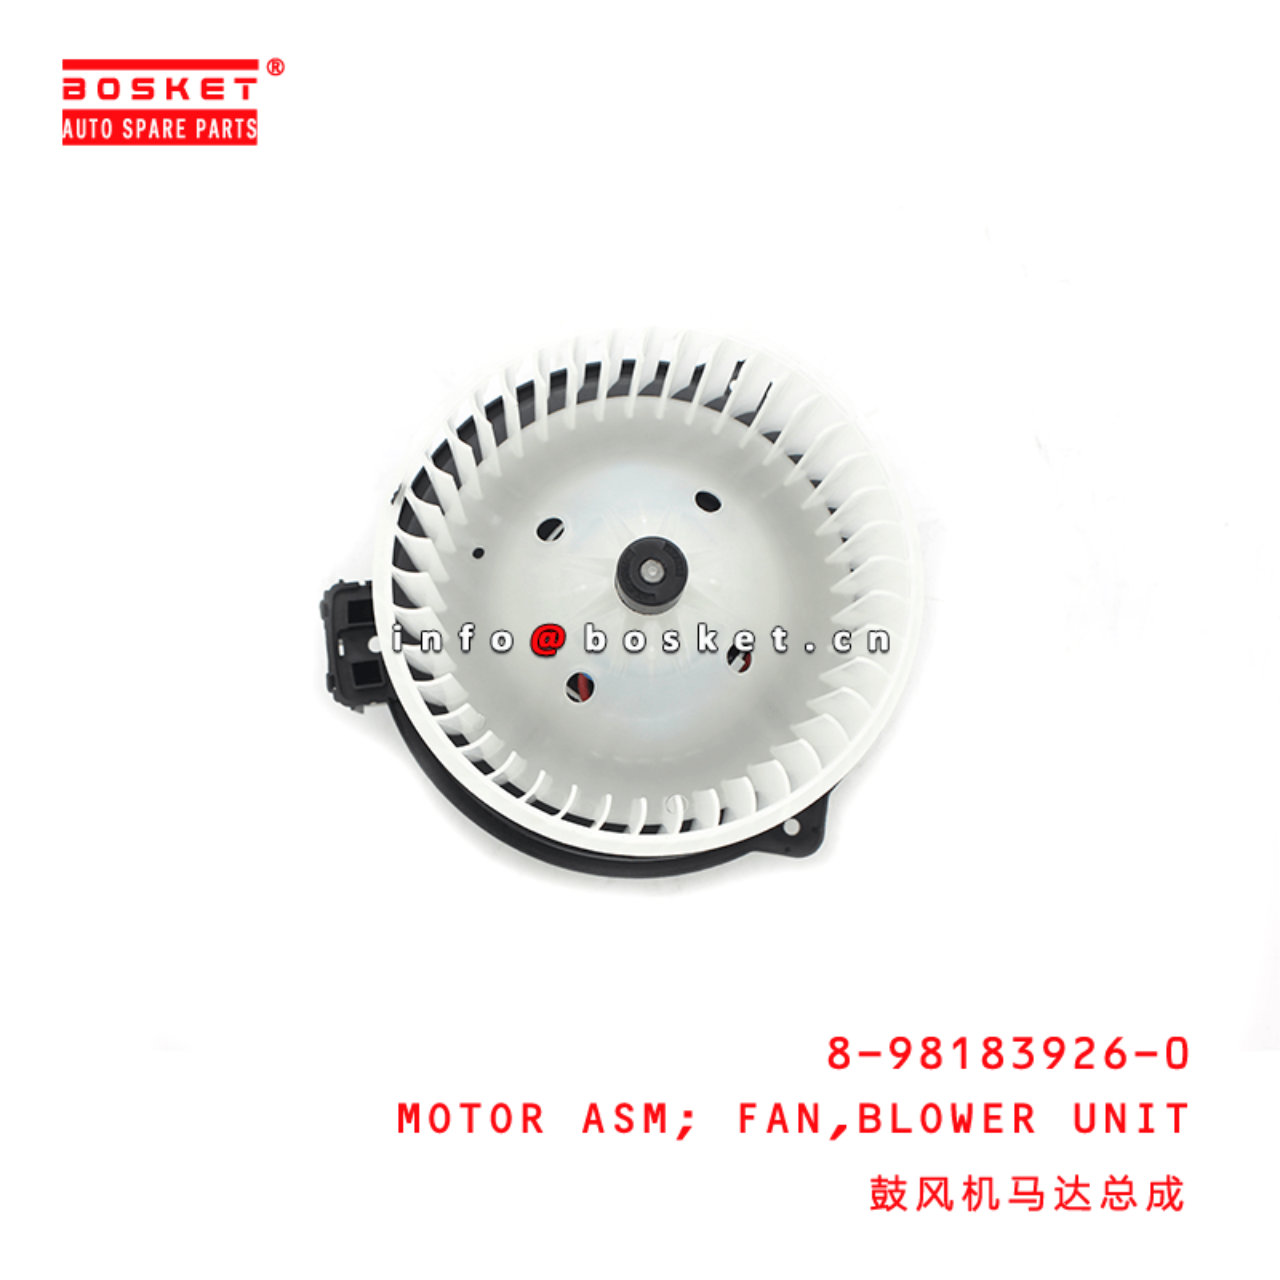 8-98183926-0 Blower Unit Fan Motor Assembly 8981839260 Suitable for ISUZU VC46 700P 4HK1